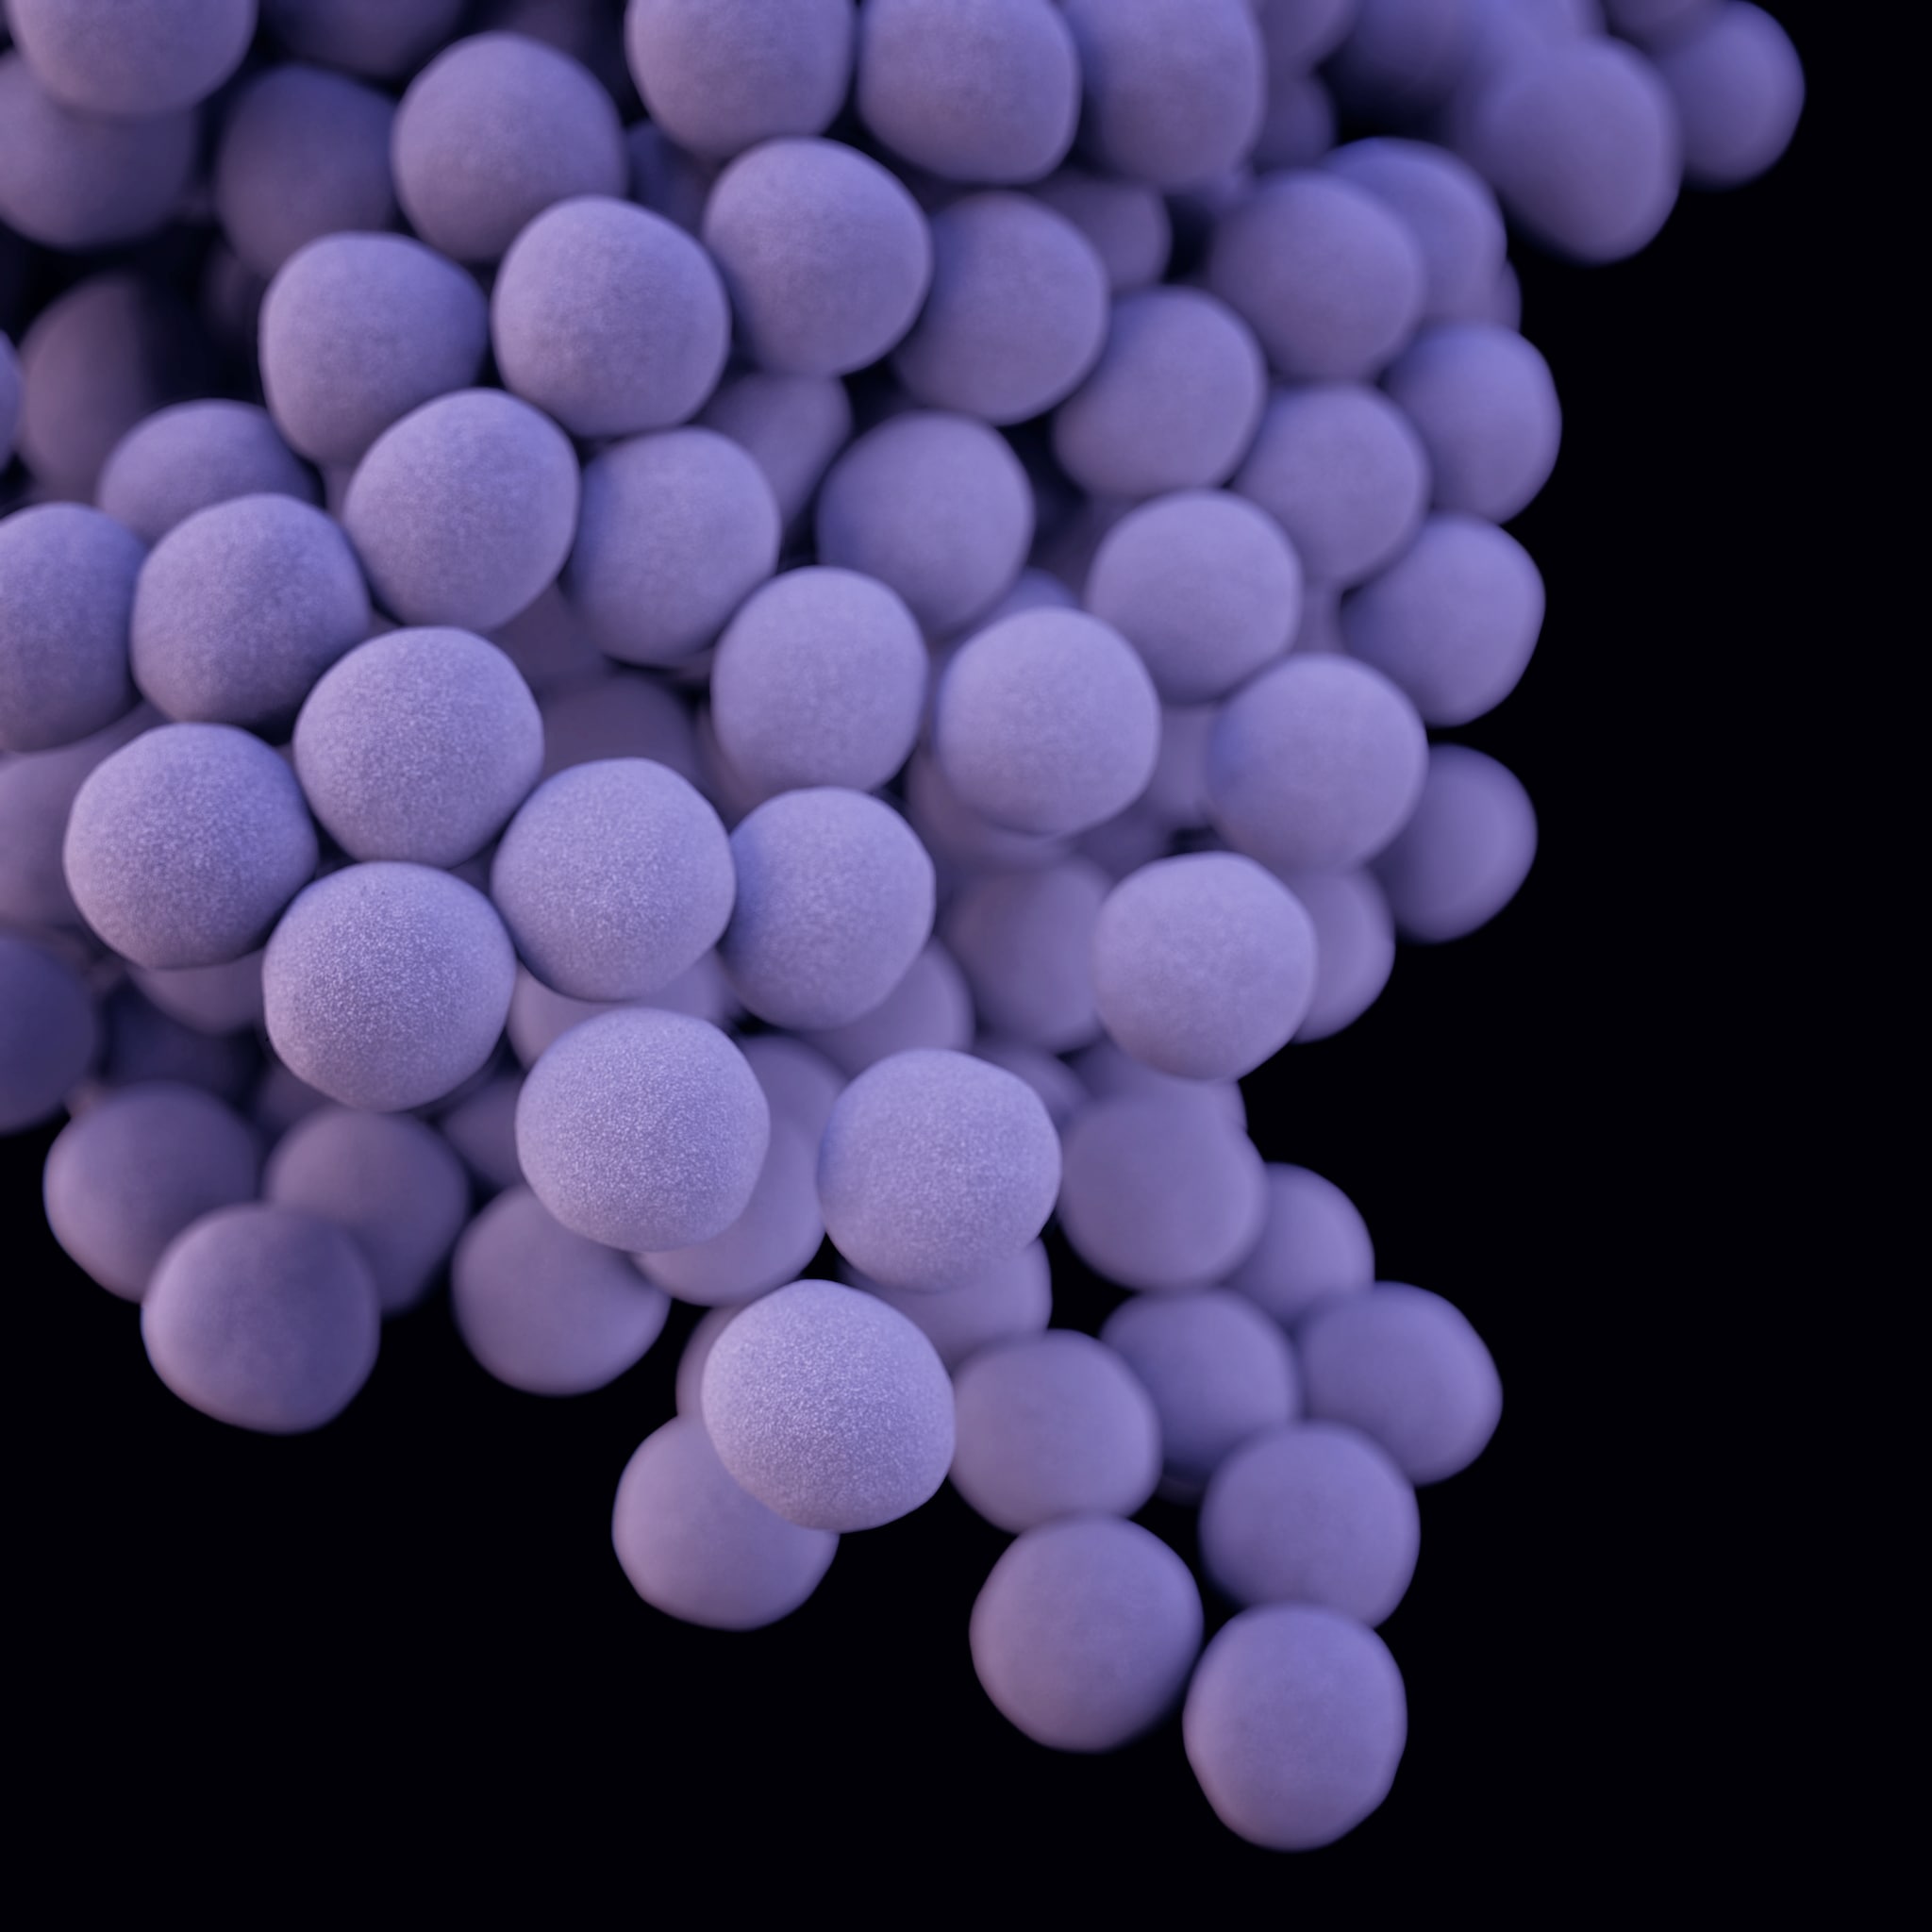 Medical illustration of vancomycin-resistant Staphylococcus aureus